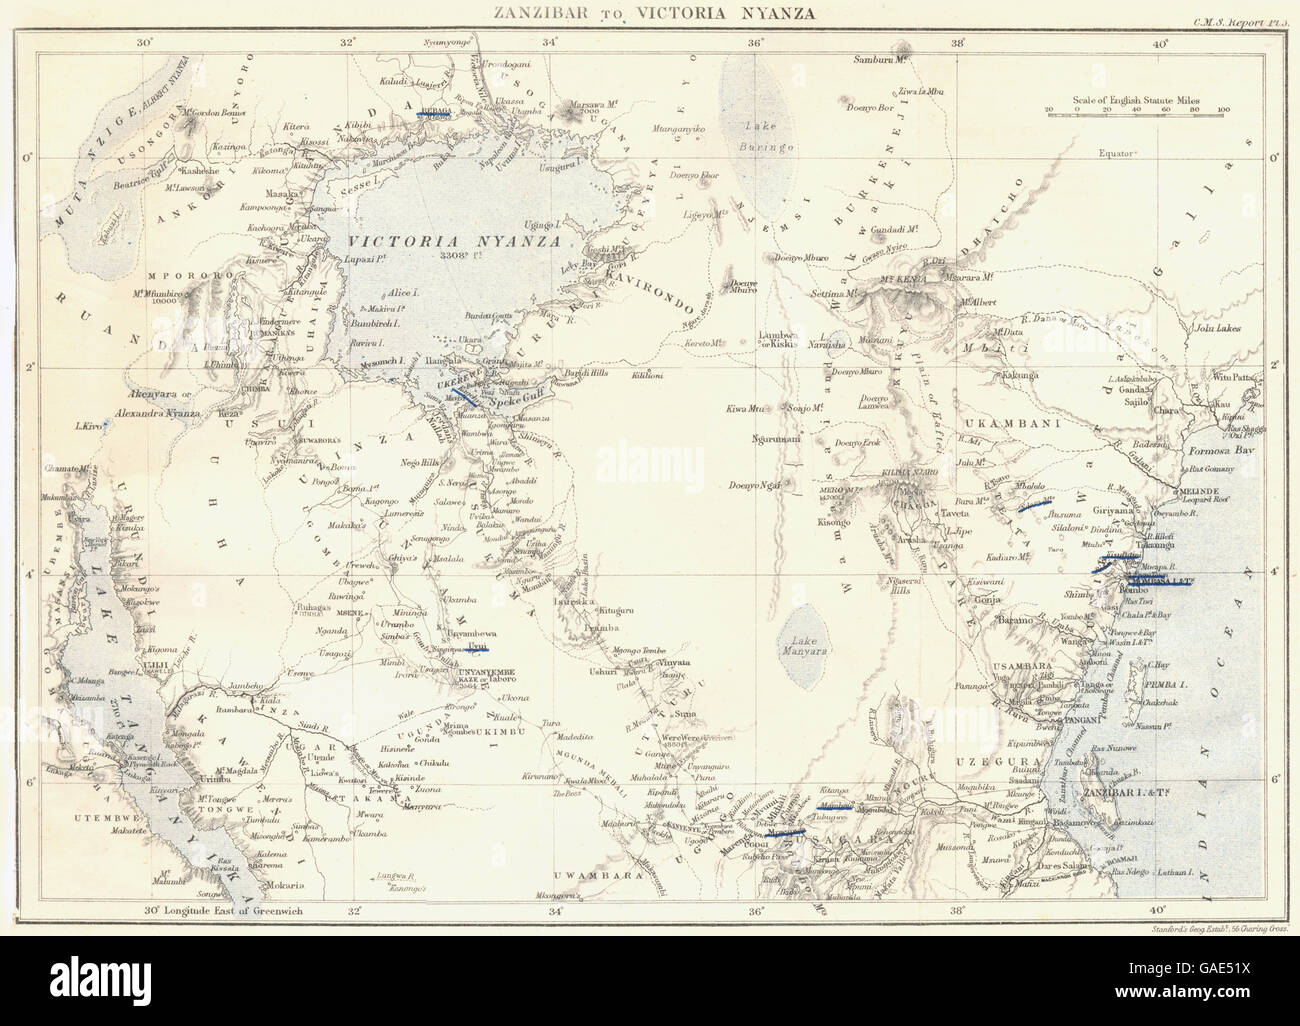 TANZANIA: Zanzibar to Victoria Nyanza. RGS map, 1883 Stock Photo